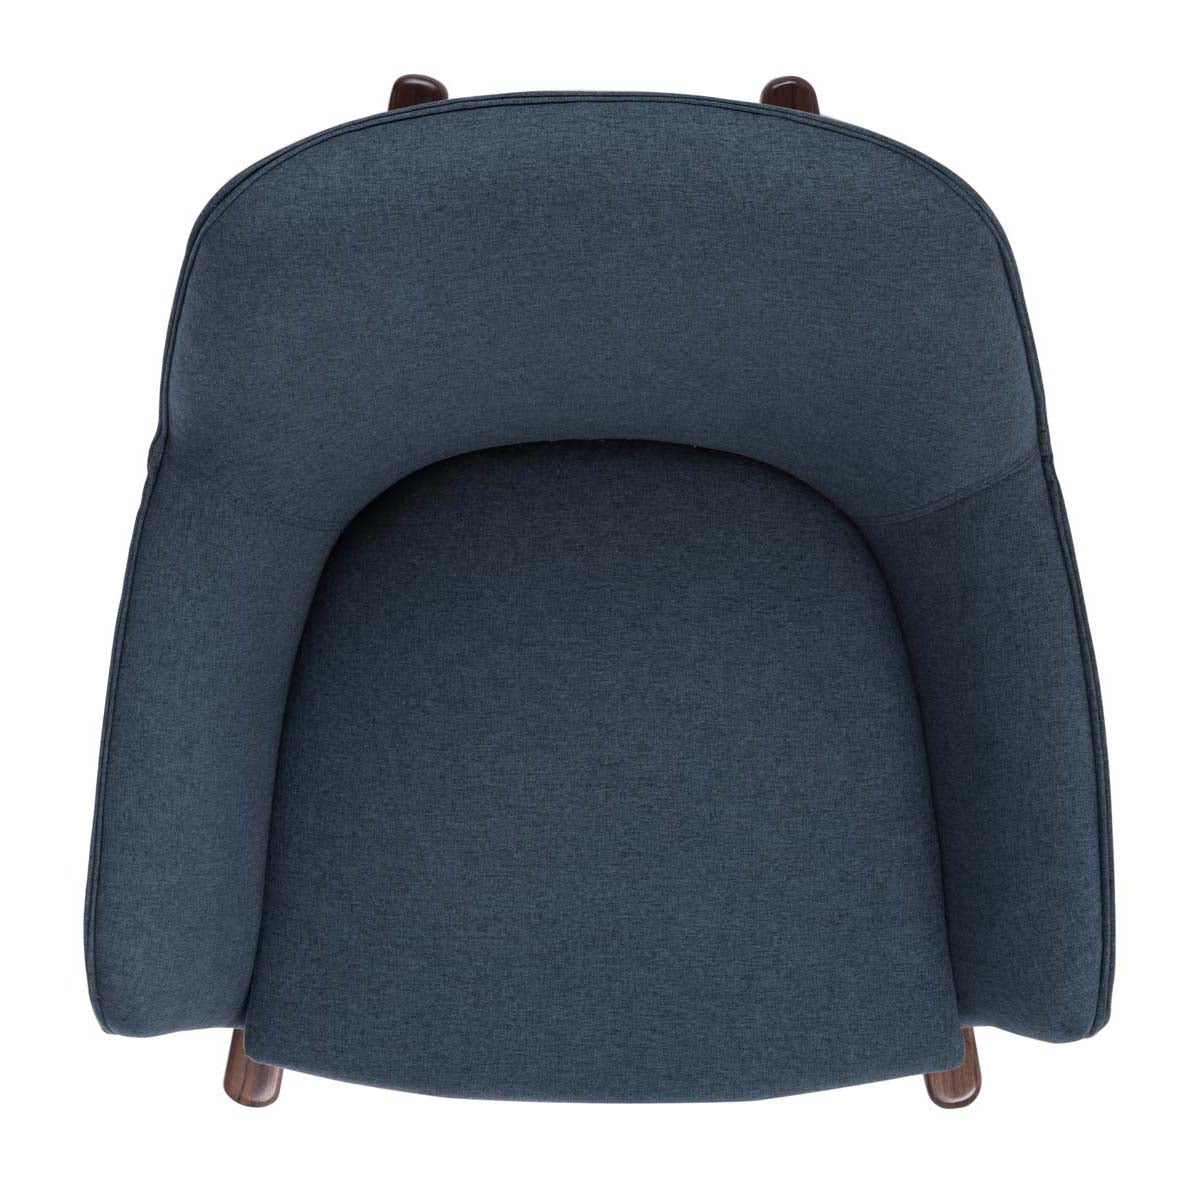 Safavieh Couture Mack Mid Century Rocking Chair - Blue